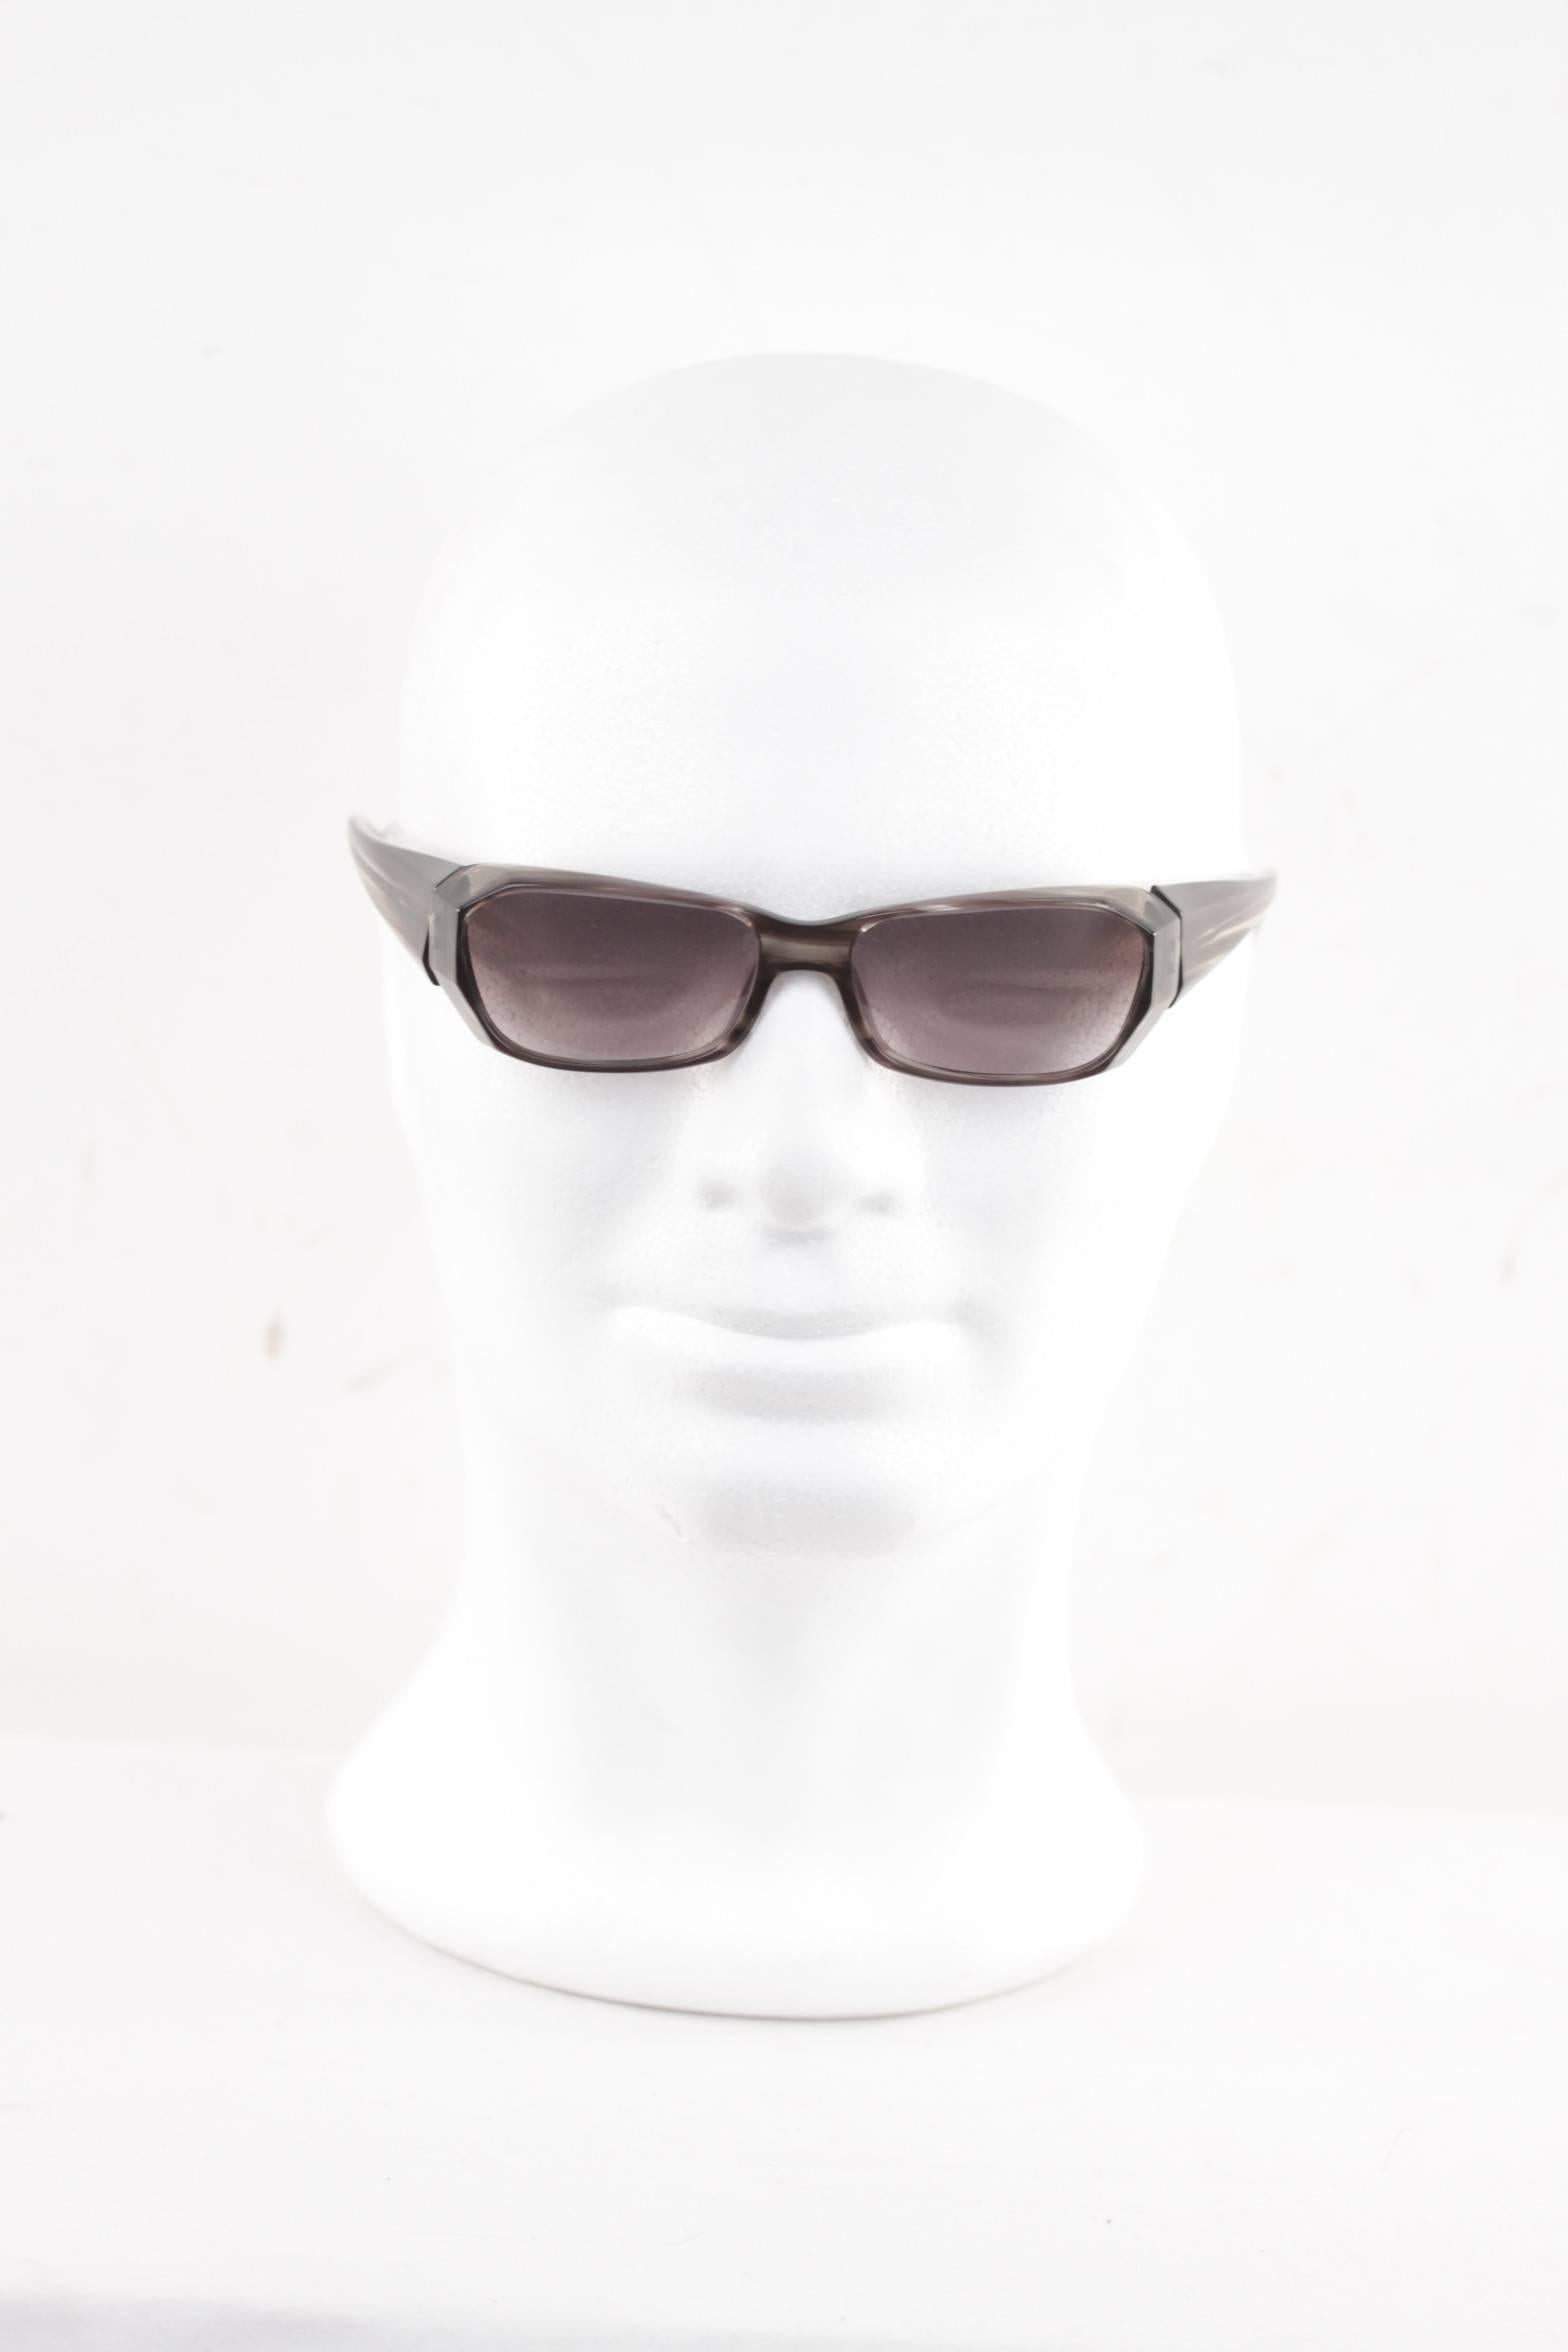 ALAIN MIKLI paris vintage sunglasses A0323-03 gray frame EYEWEAR w/CASE 5